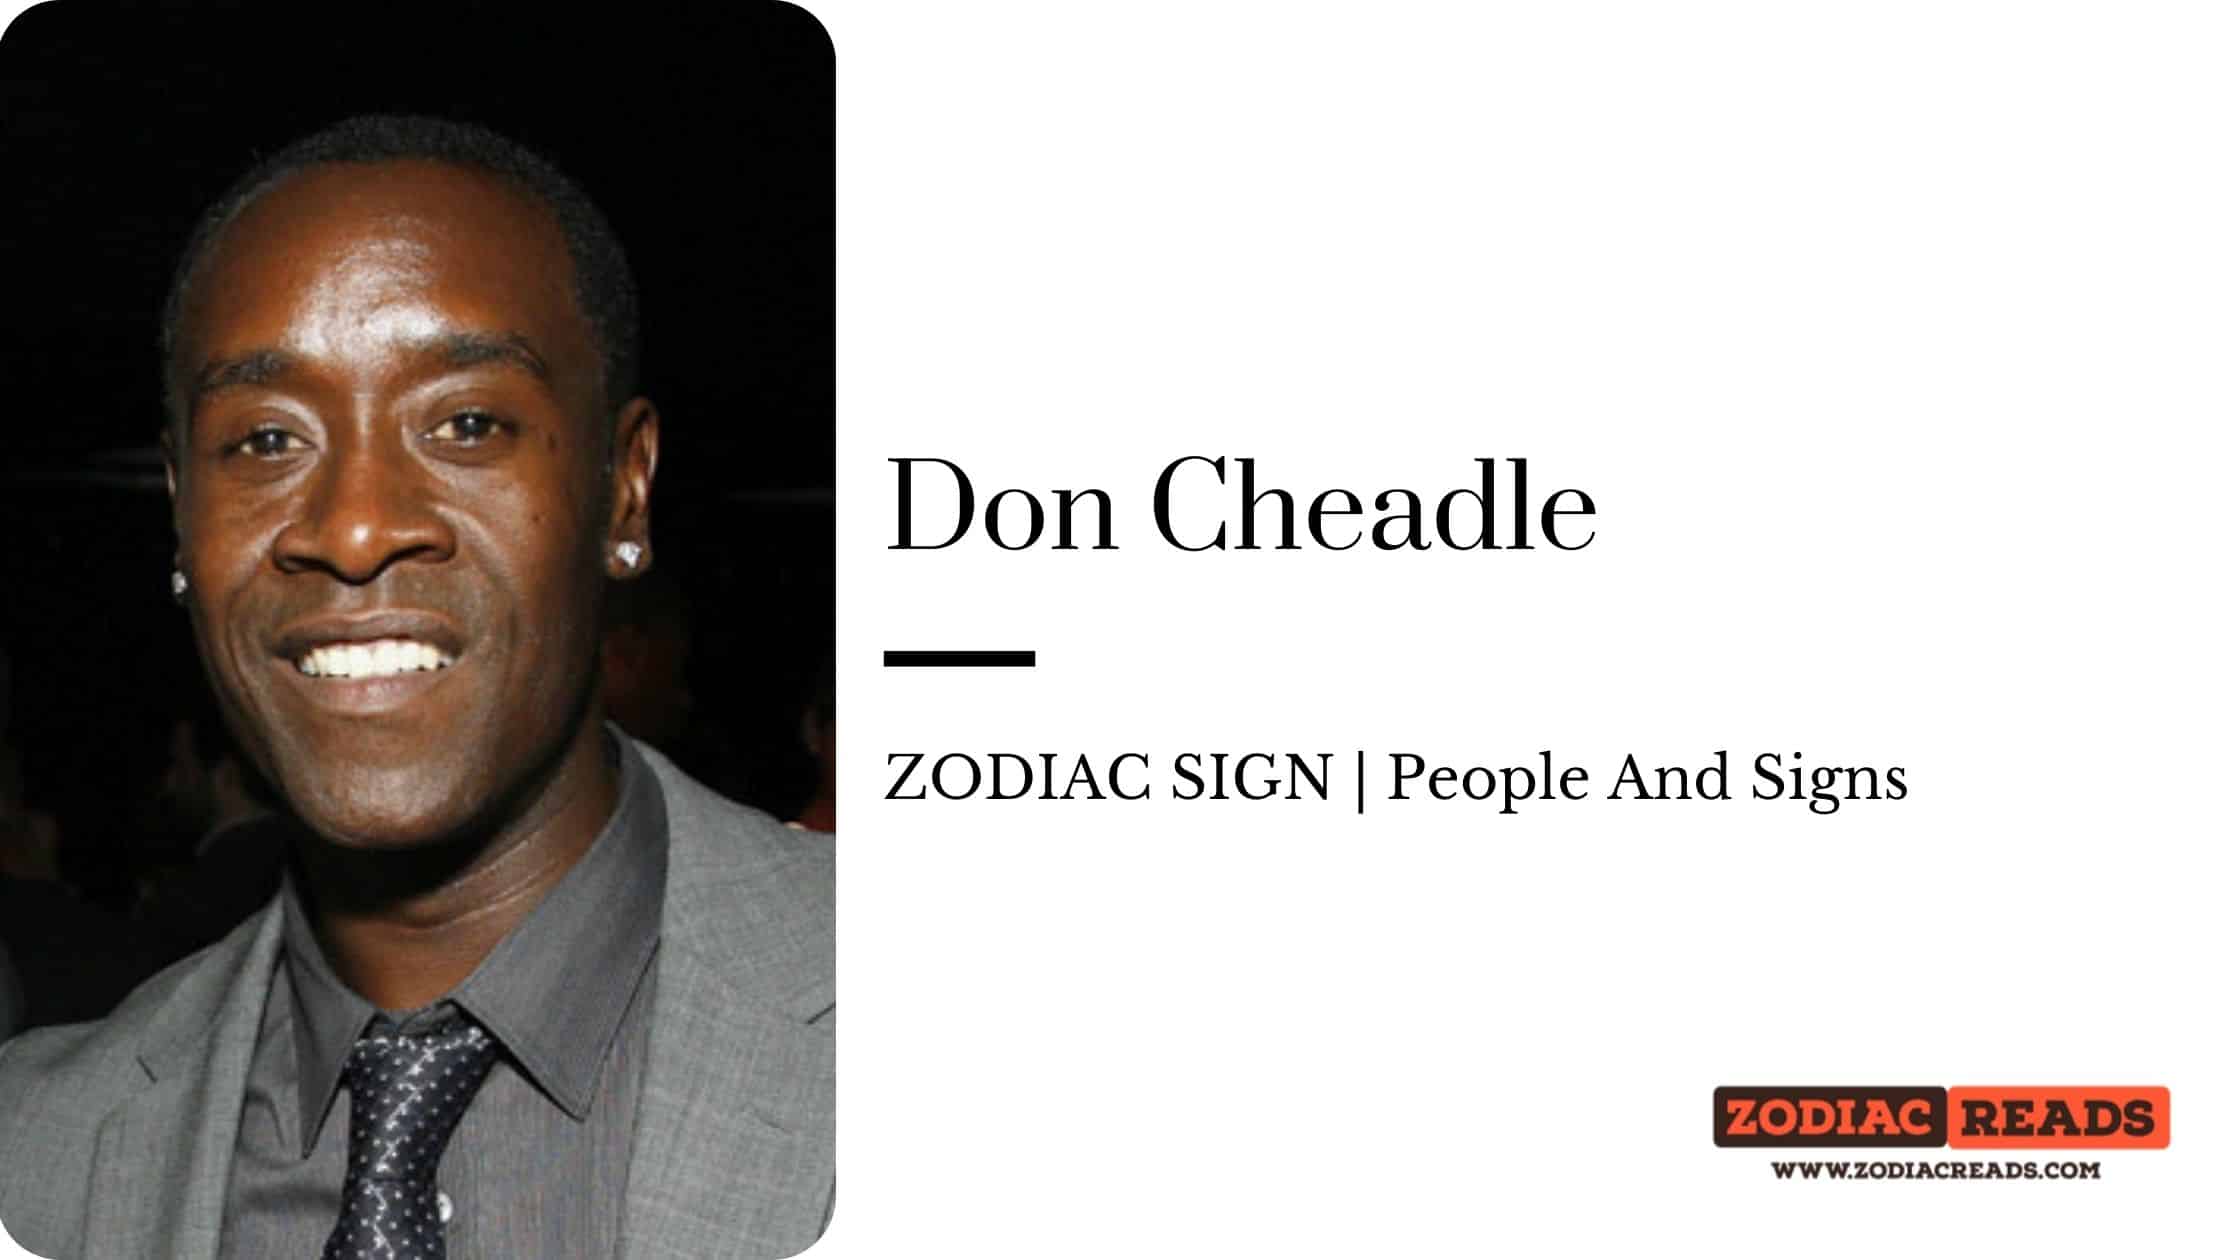 Don Cheadle zodiac